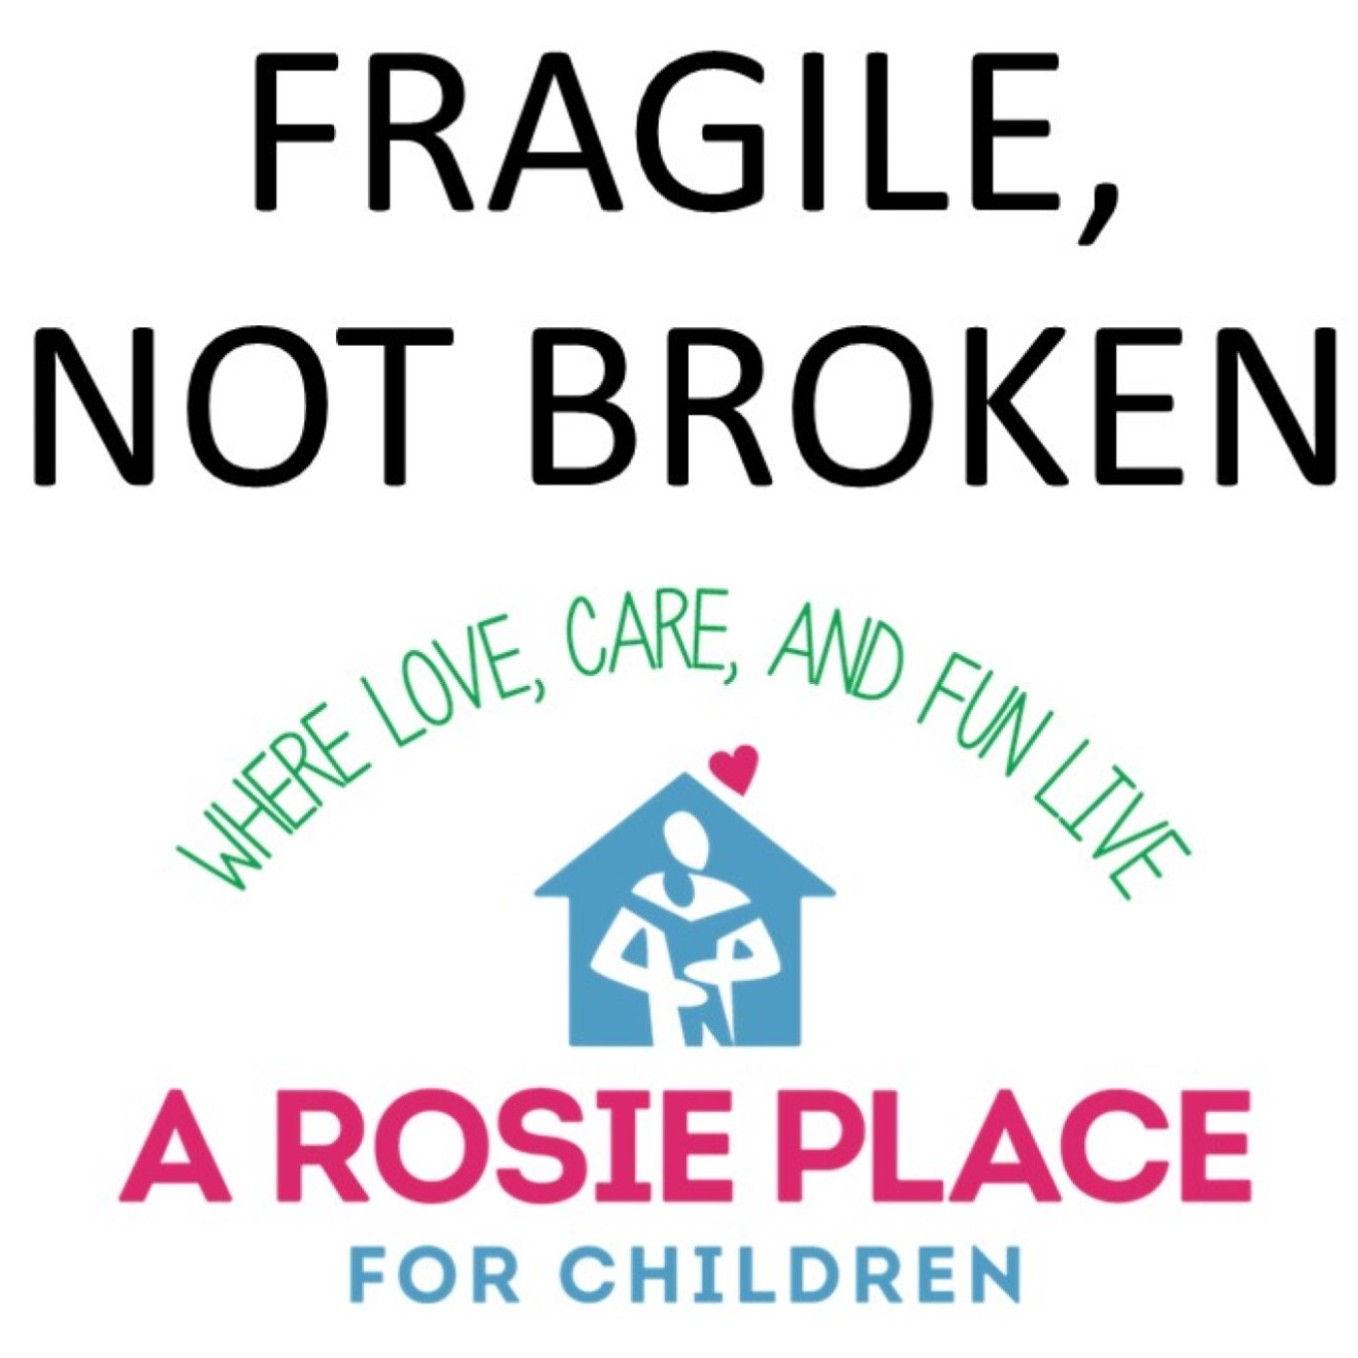 Fragile, Not Broken - A Rosie Place for Children